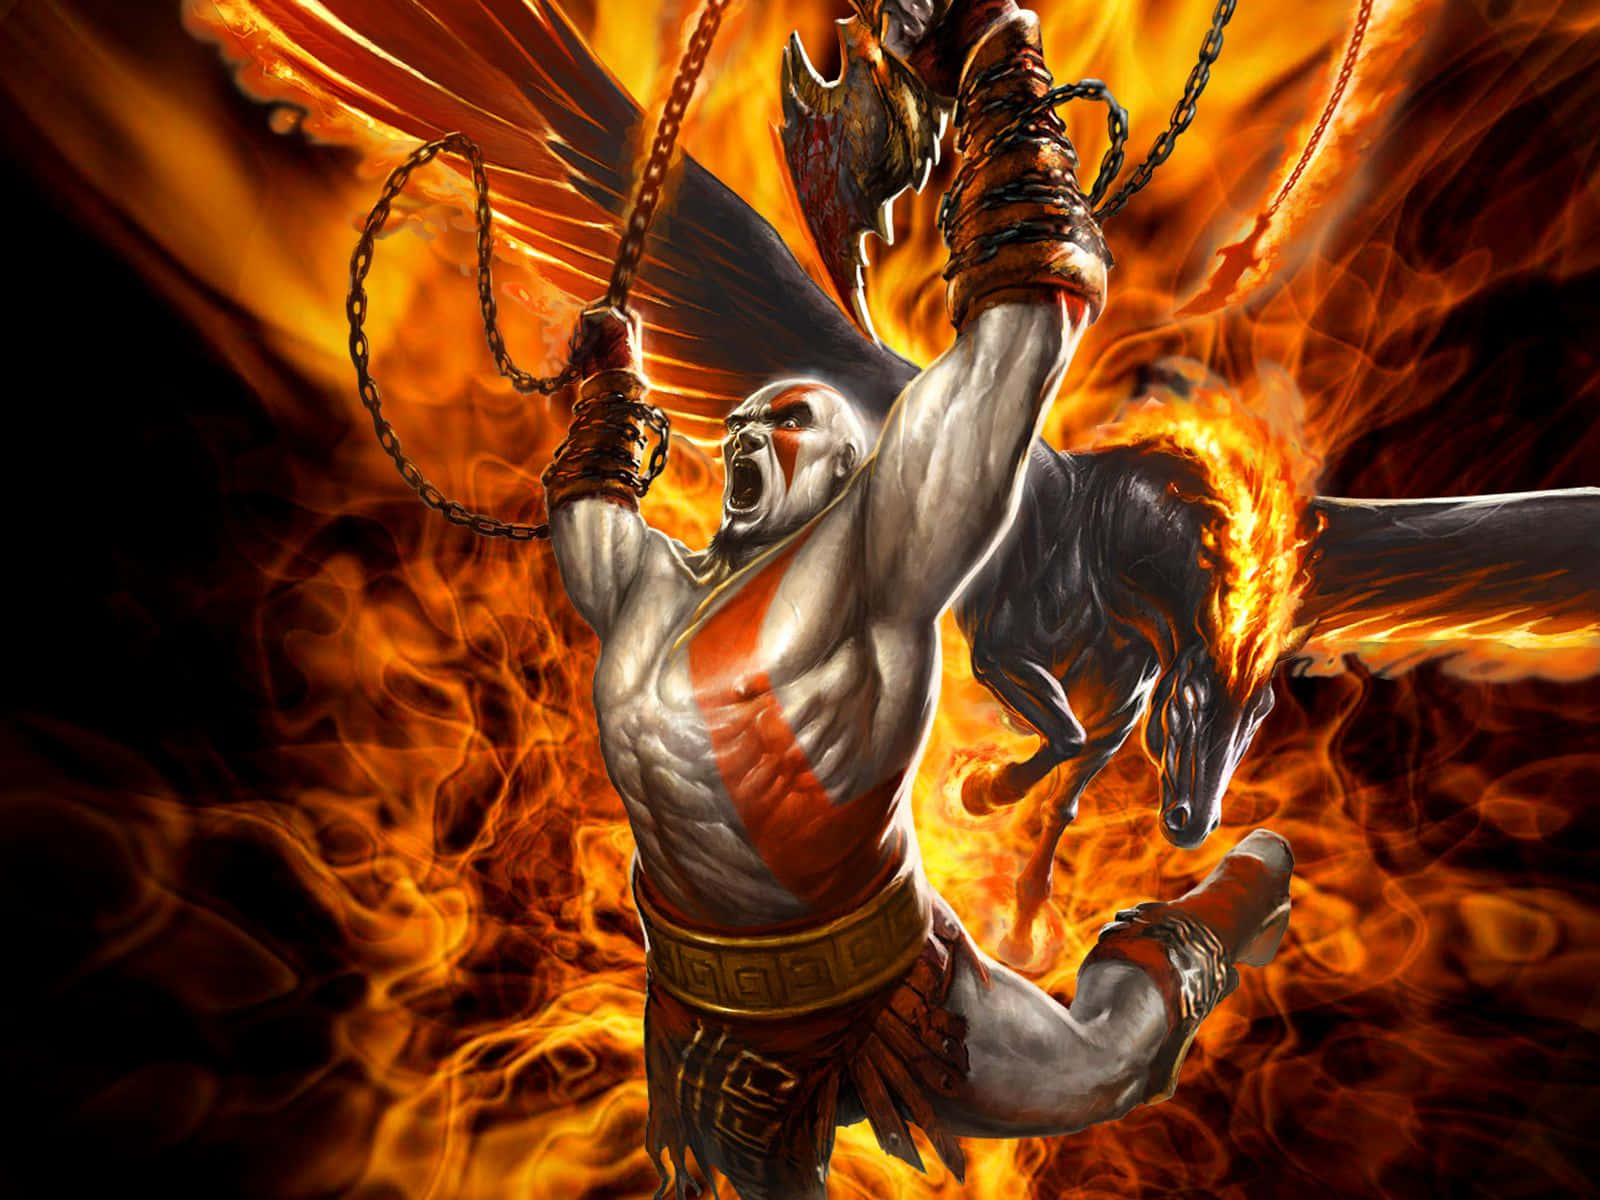 Kratos In Battle Against Hades In “God of War 3” Wallpaper